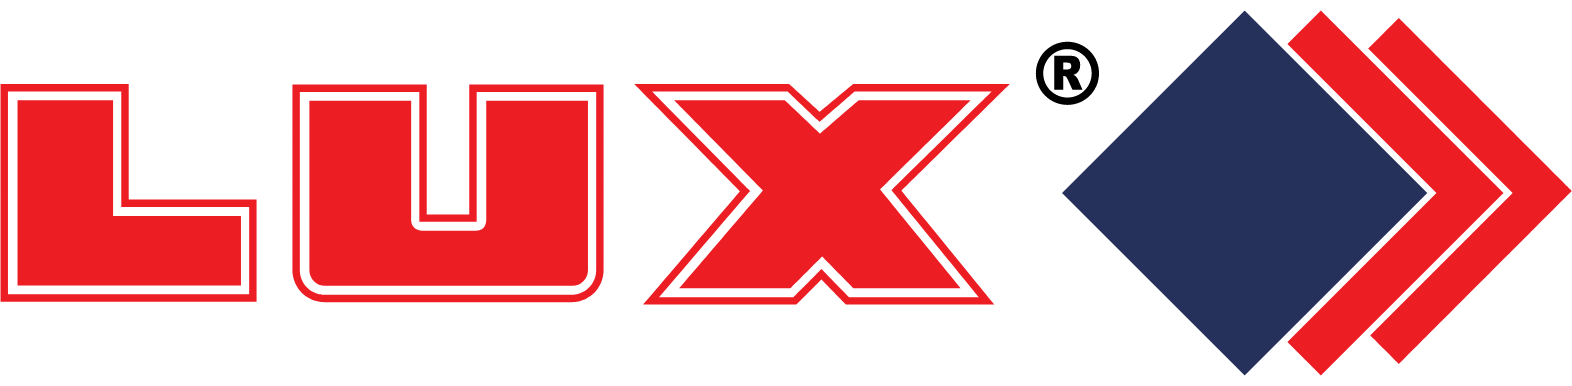 Lux Industries logo large (transparent PNG)